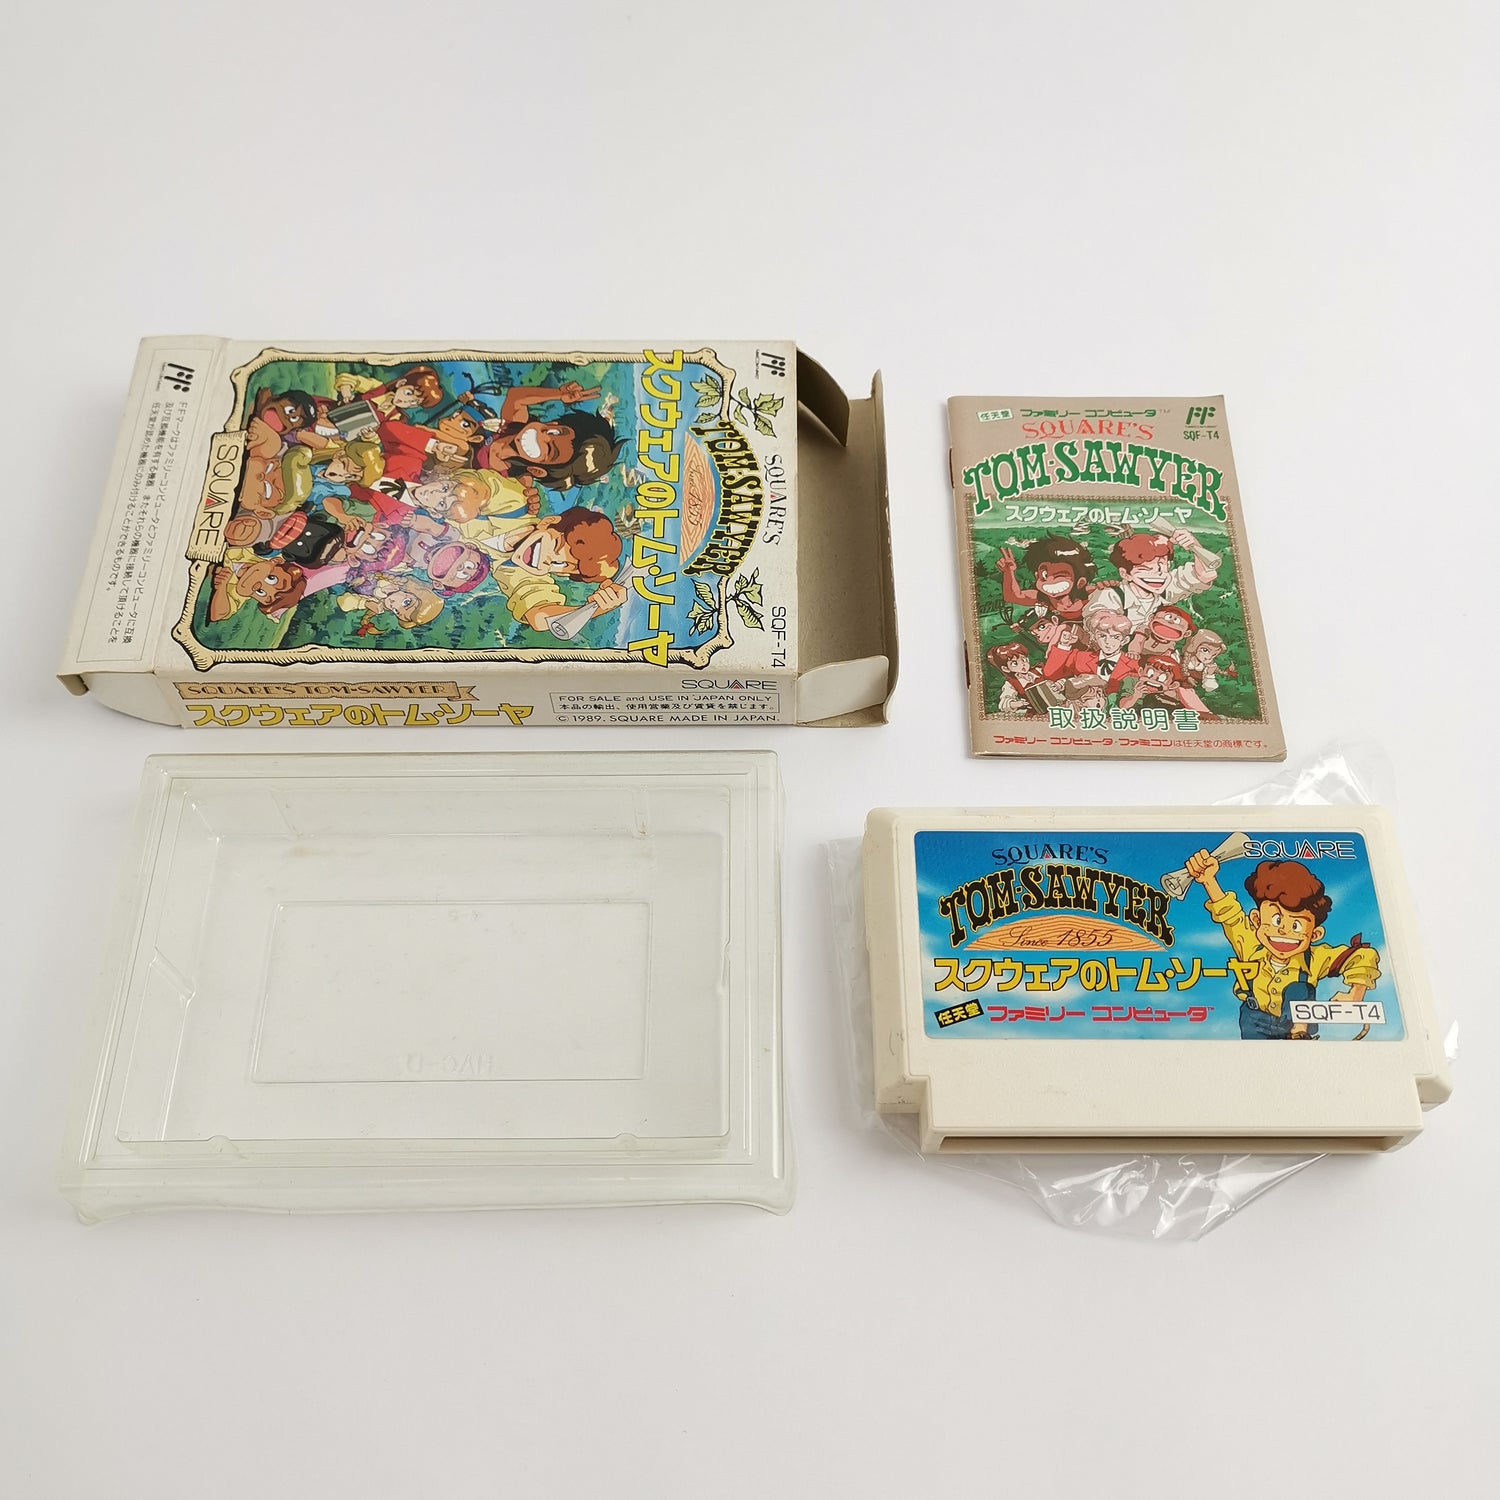 Nintendo Famicom game: Square's Tom Sawyer in original packaging | NTSC-J JAPAN Version NES